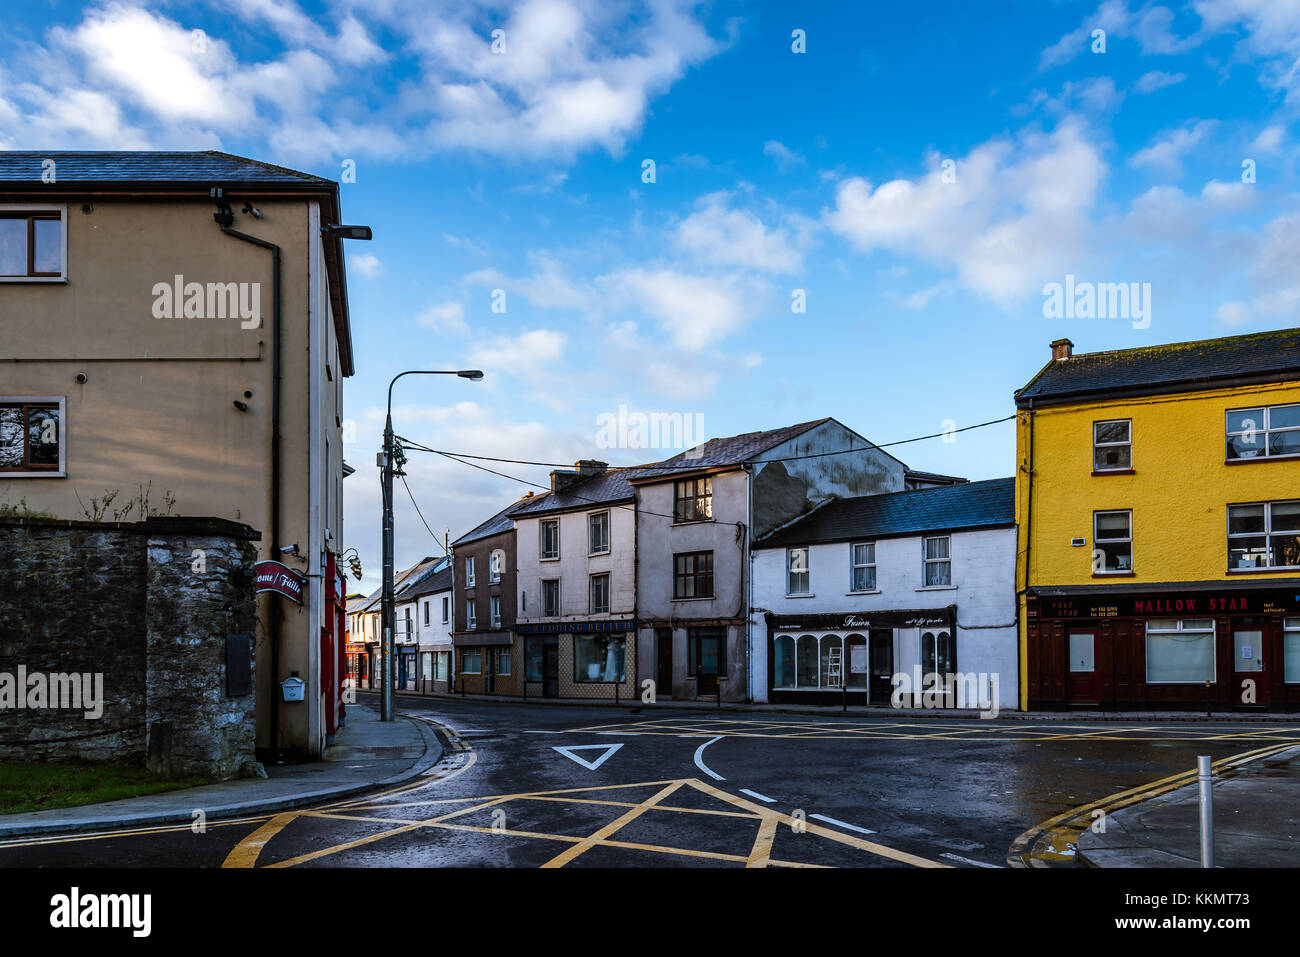 Mallow Springs, County Cork, Ireland | SpringerLink